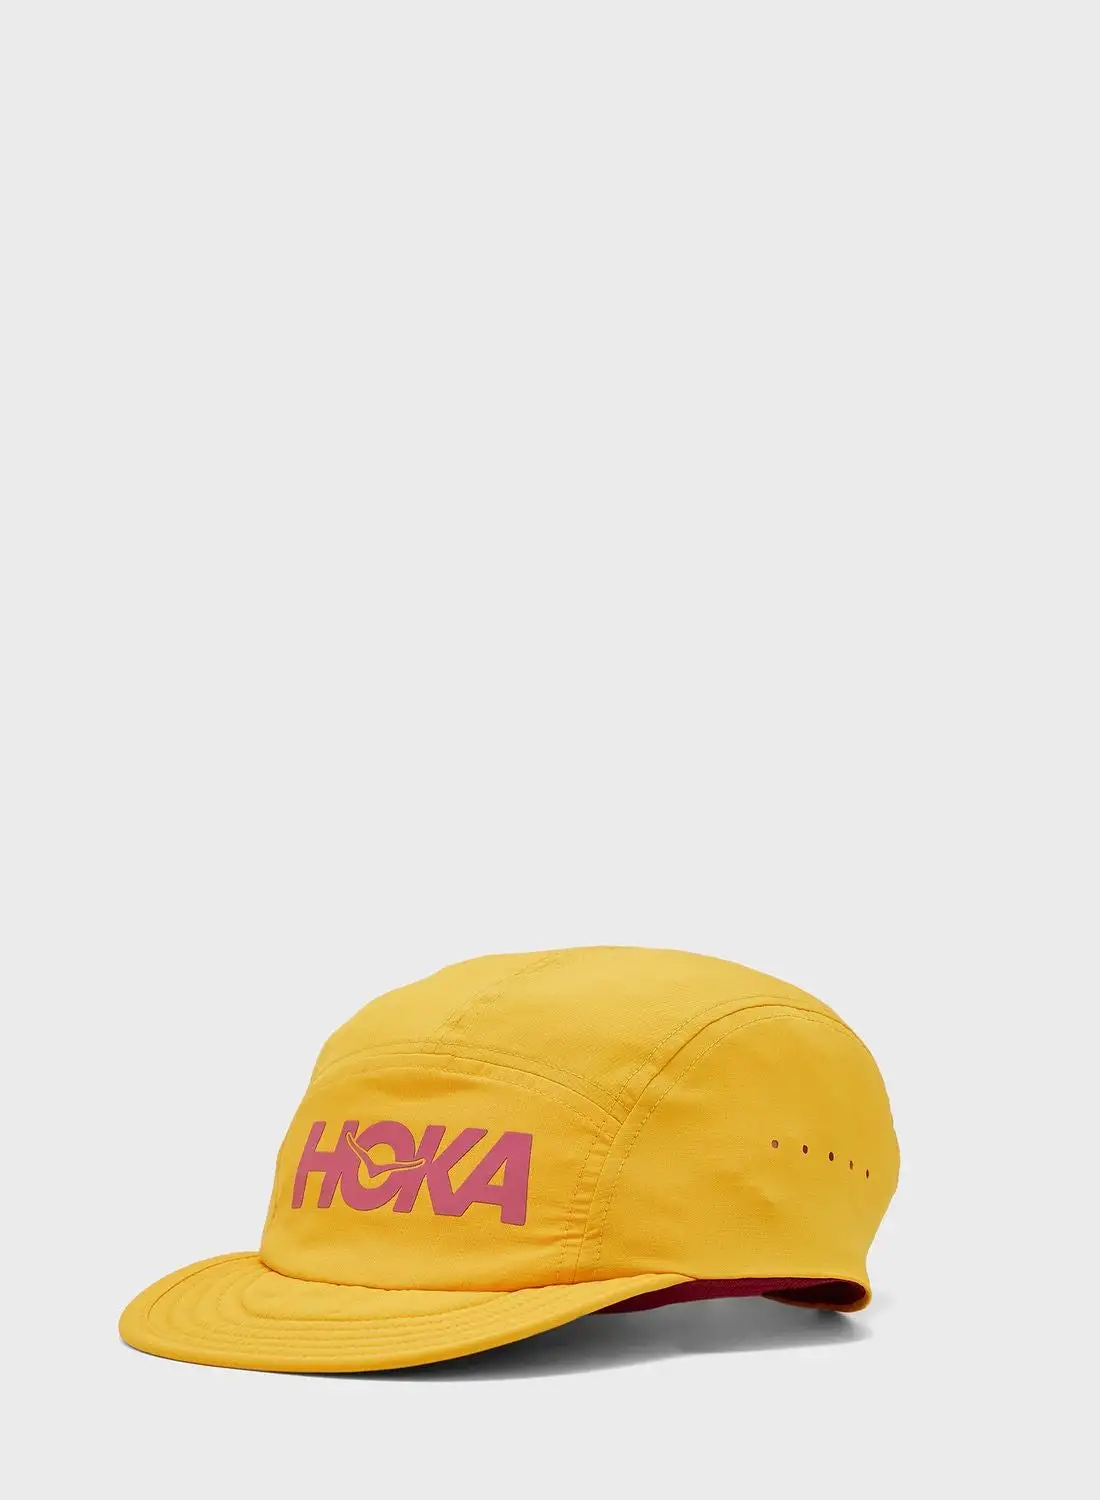 Hoka Packable Trail Hat